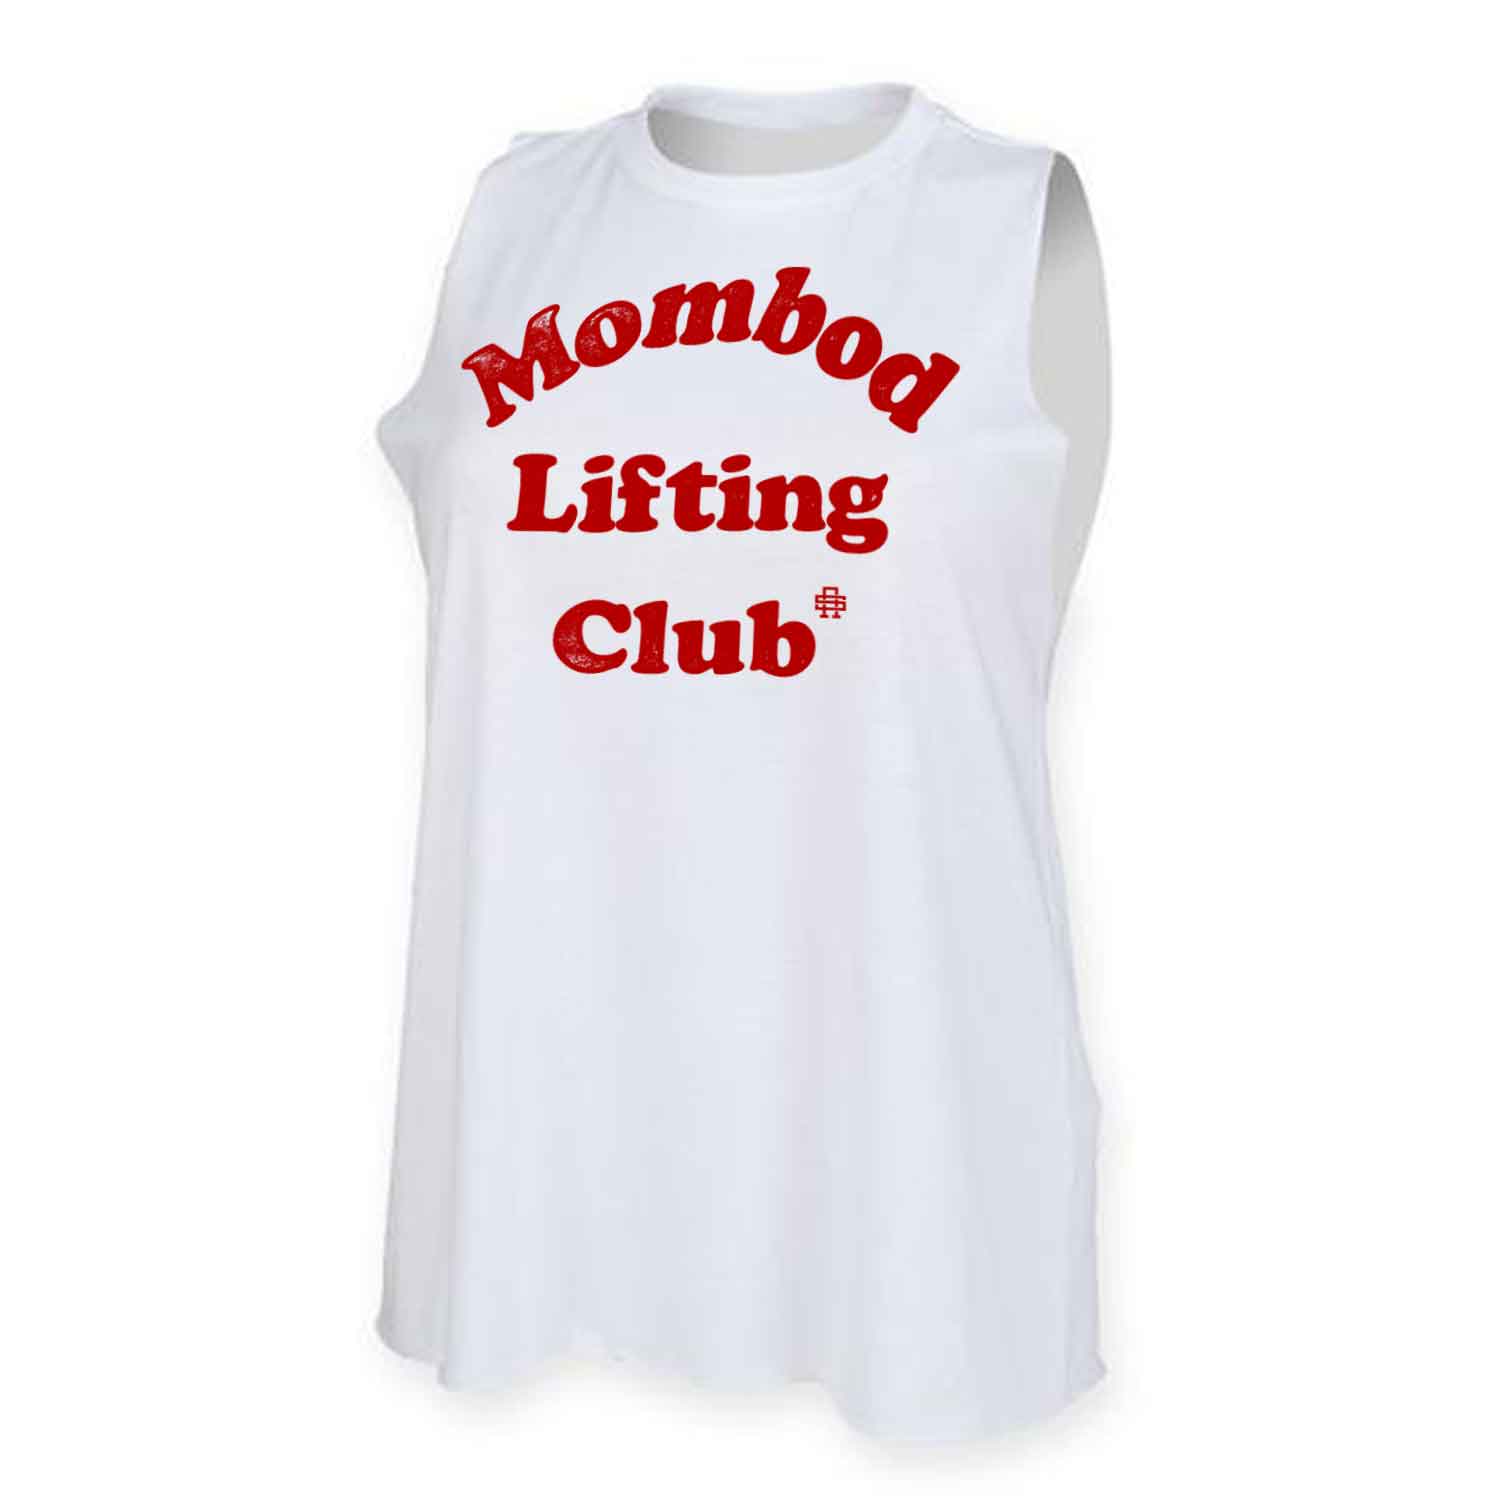 Mombod Lifting Club Ladies Cut Off Tank